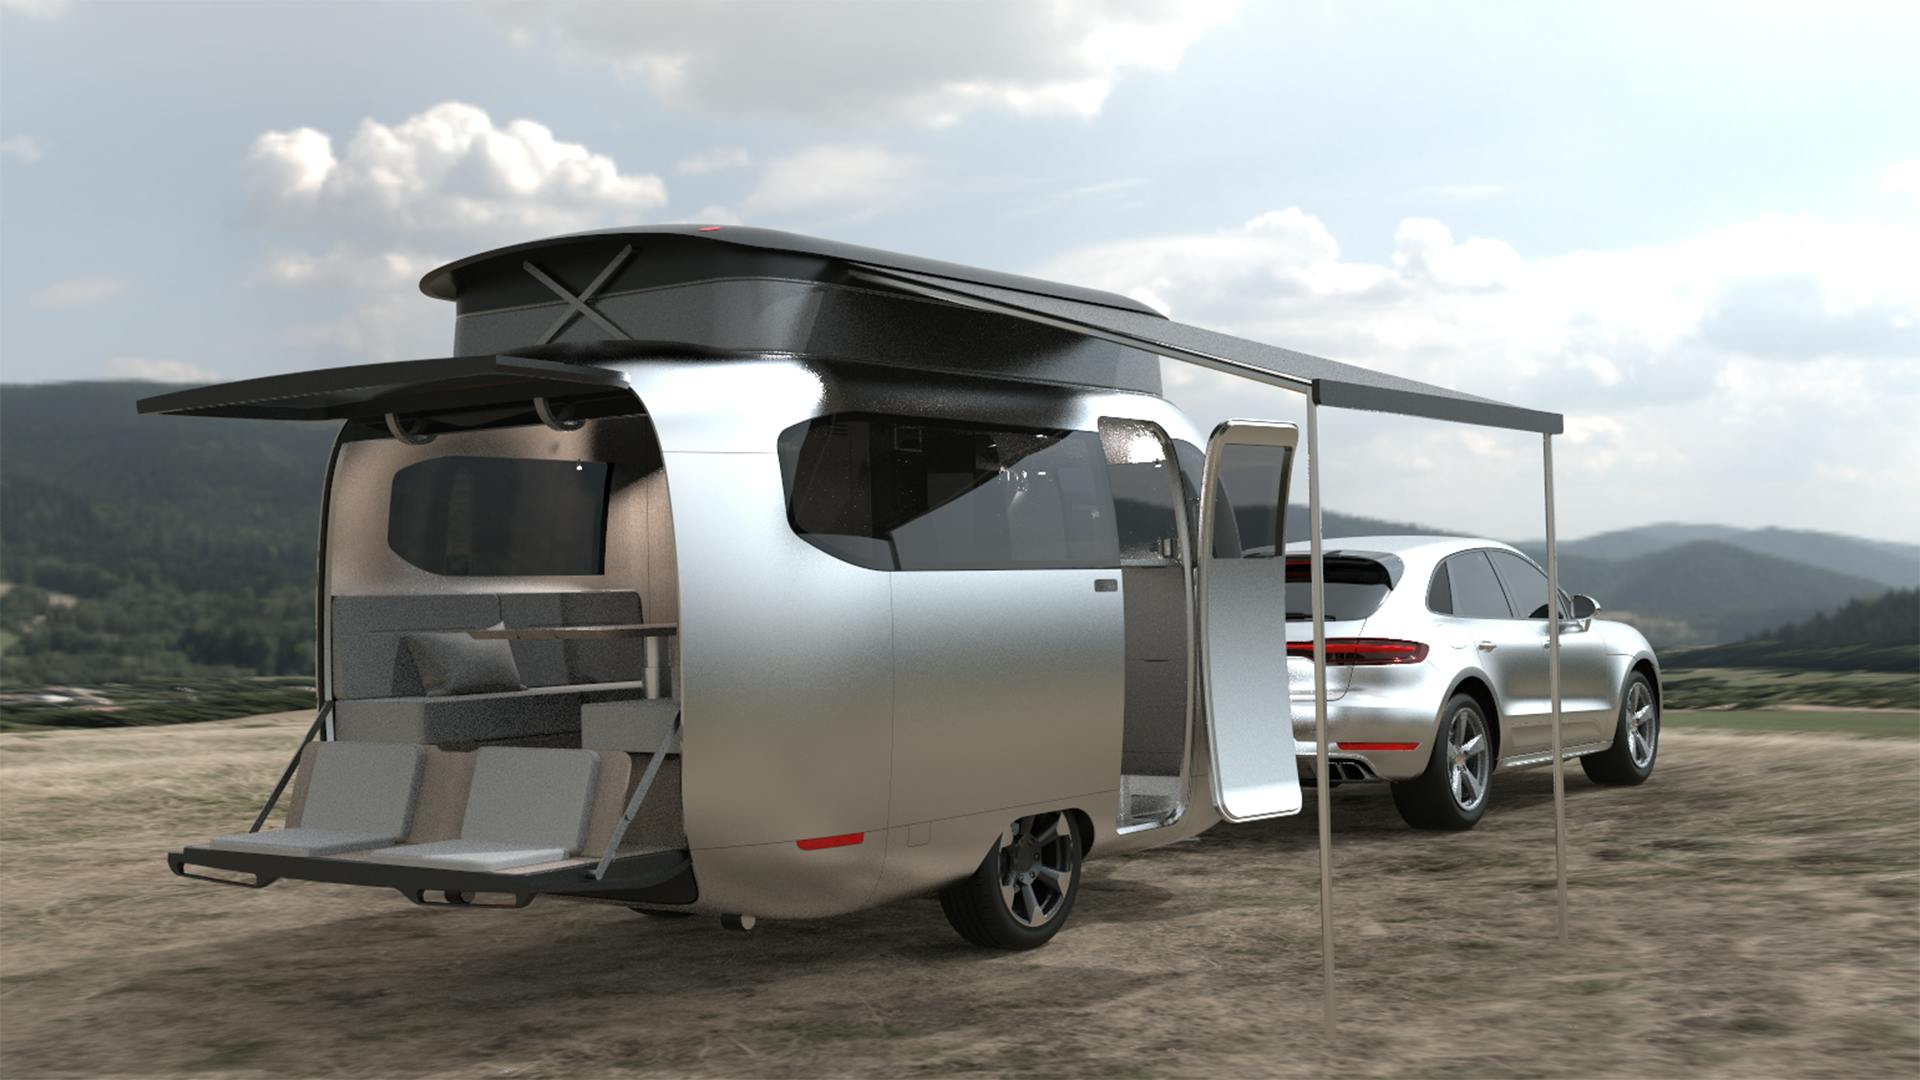 Airstream Porsche camper trailer remote setup